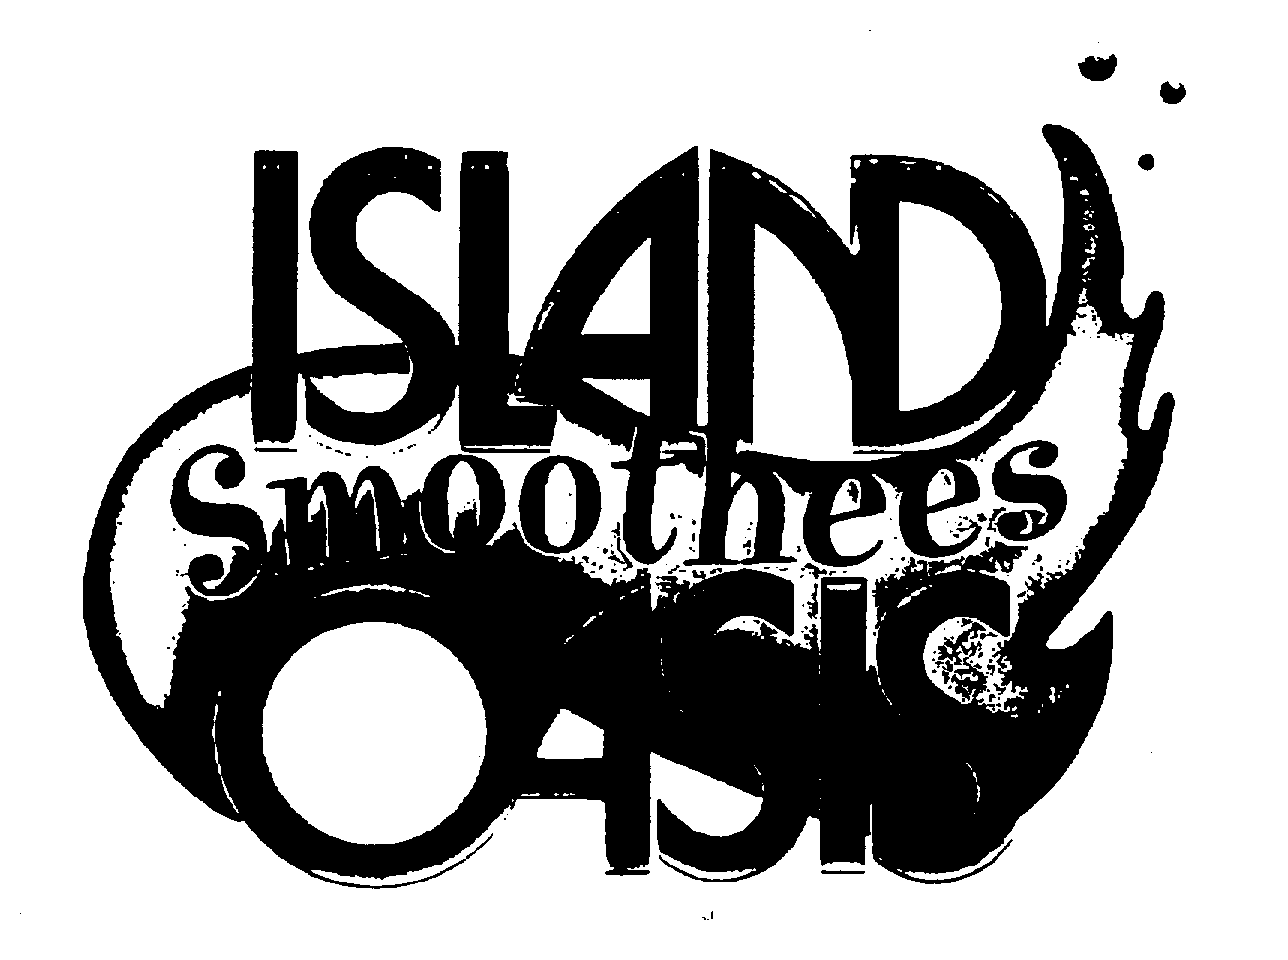  SMOOTHEES ISLAND OASIS